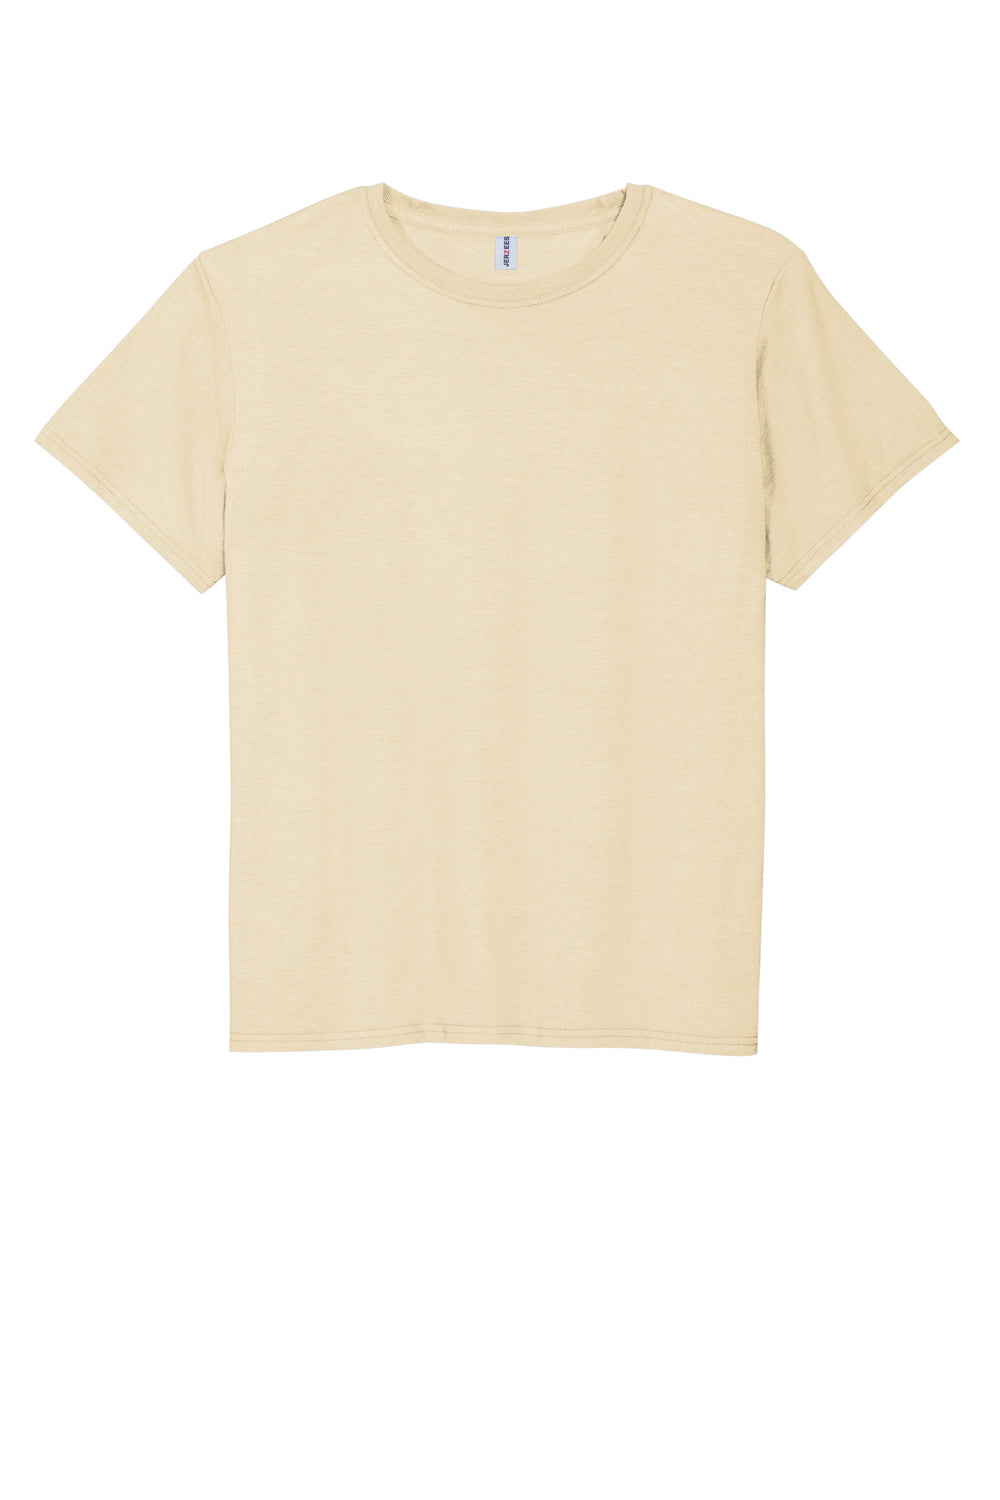 Jerzees 560M Mens Premium Blend Ring Spun Short Sleeve Crewneck T-Shirt Heather Sweet Cream Flat Front